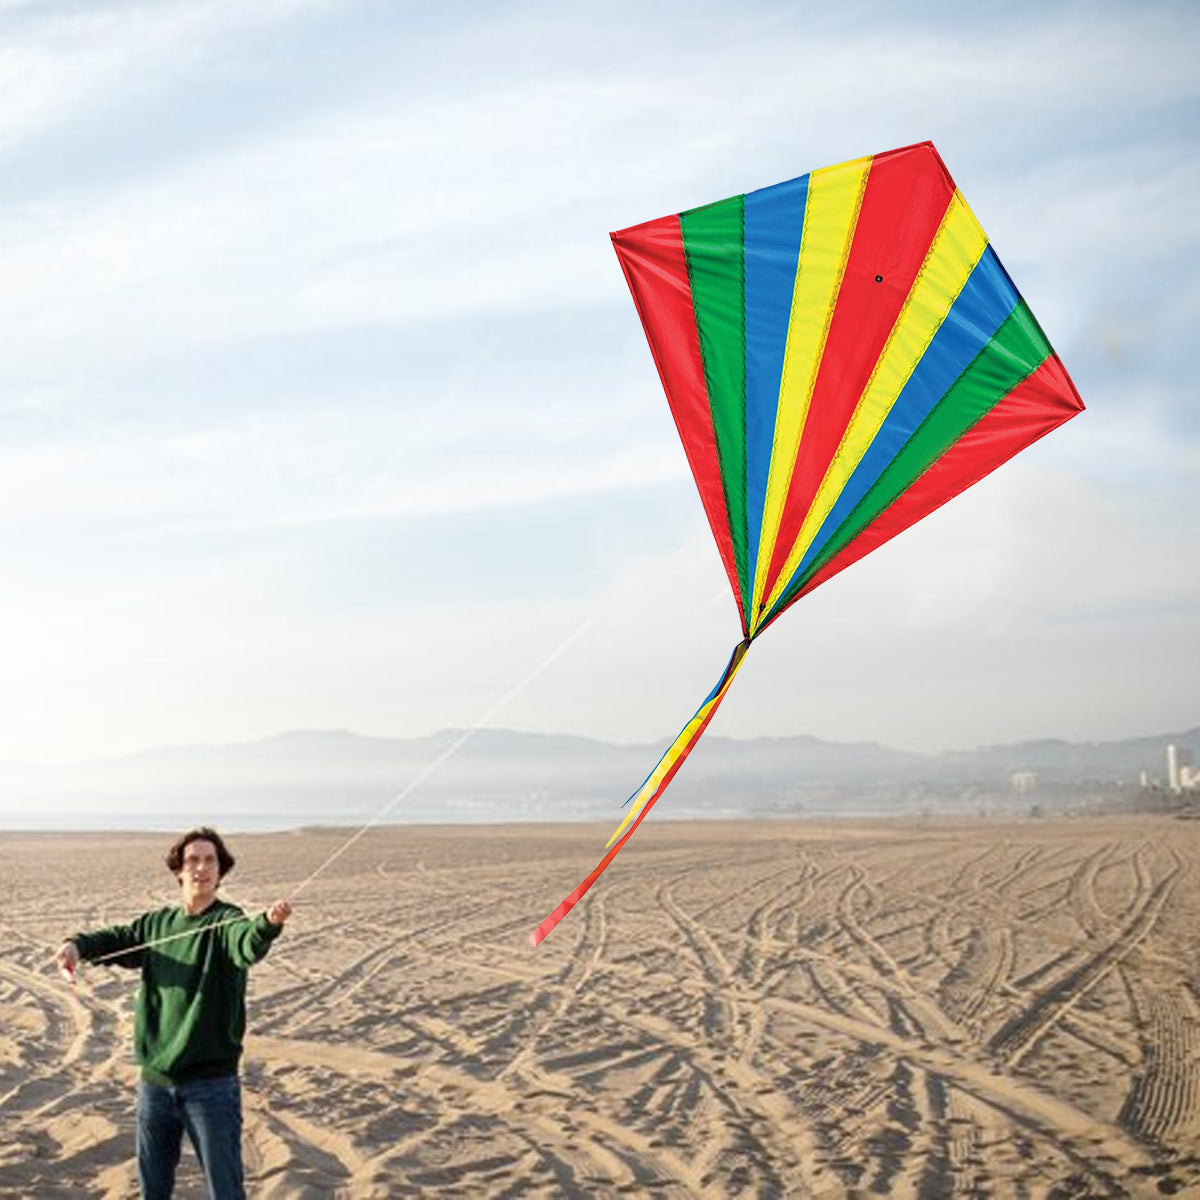 Melissa & Doug Spectrum Diamond Kite – 30" Nylon With String